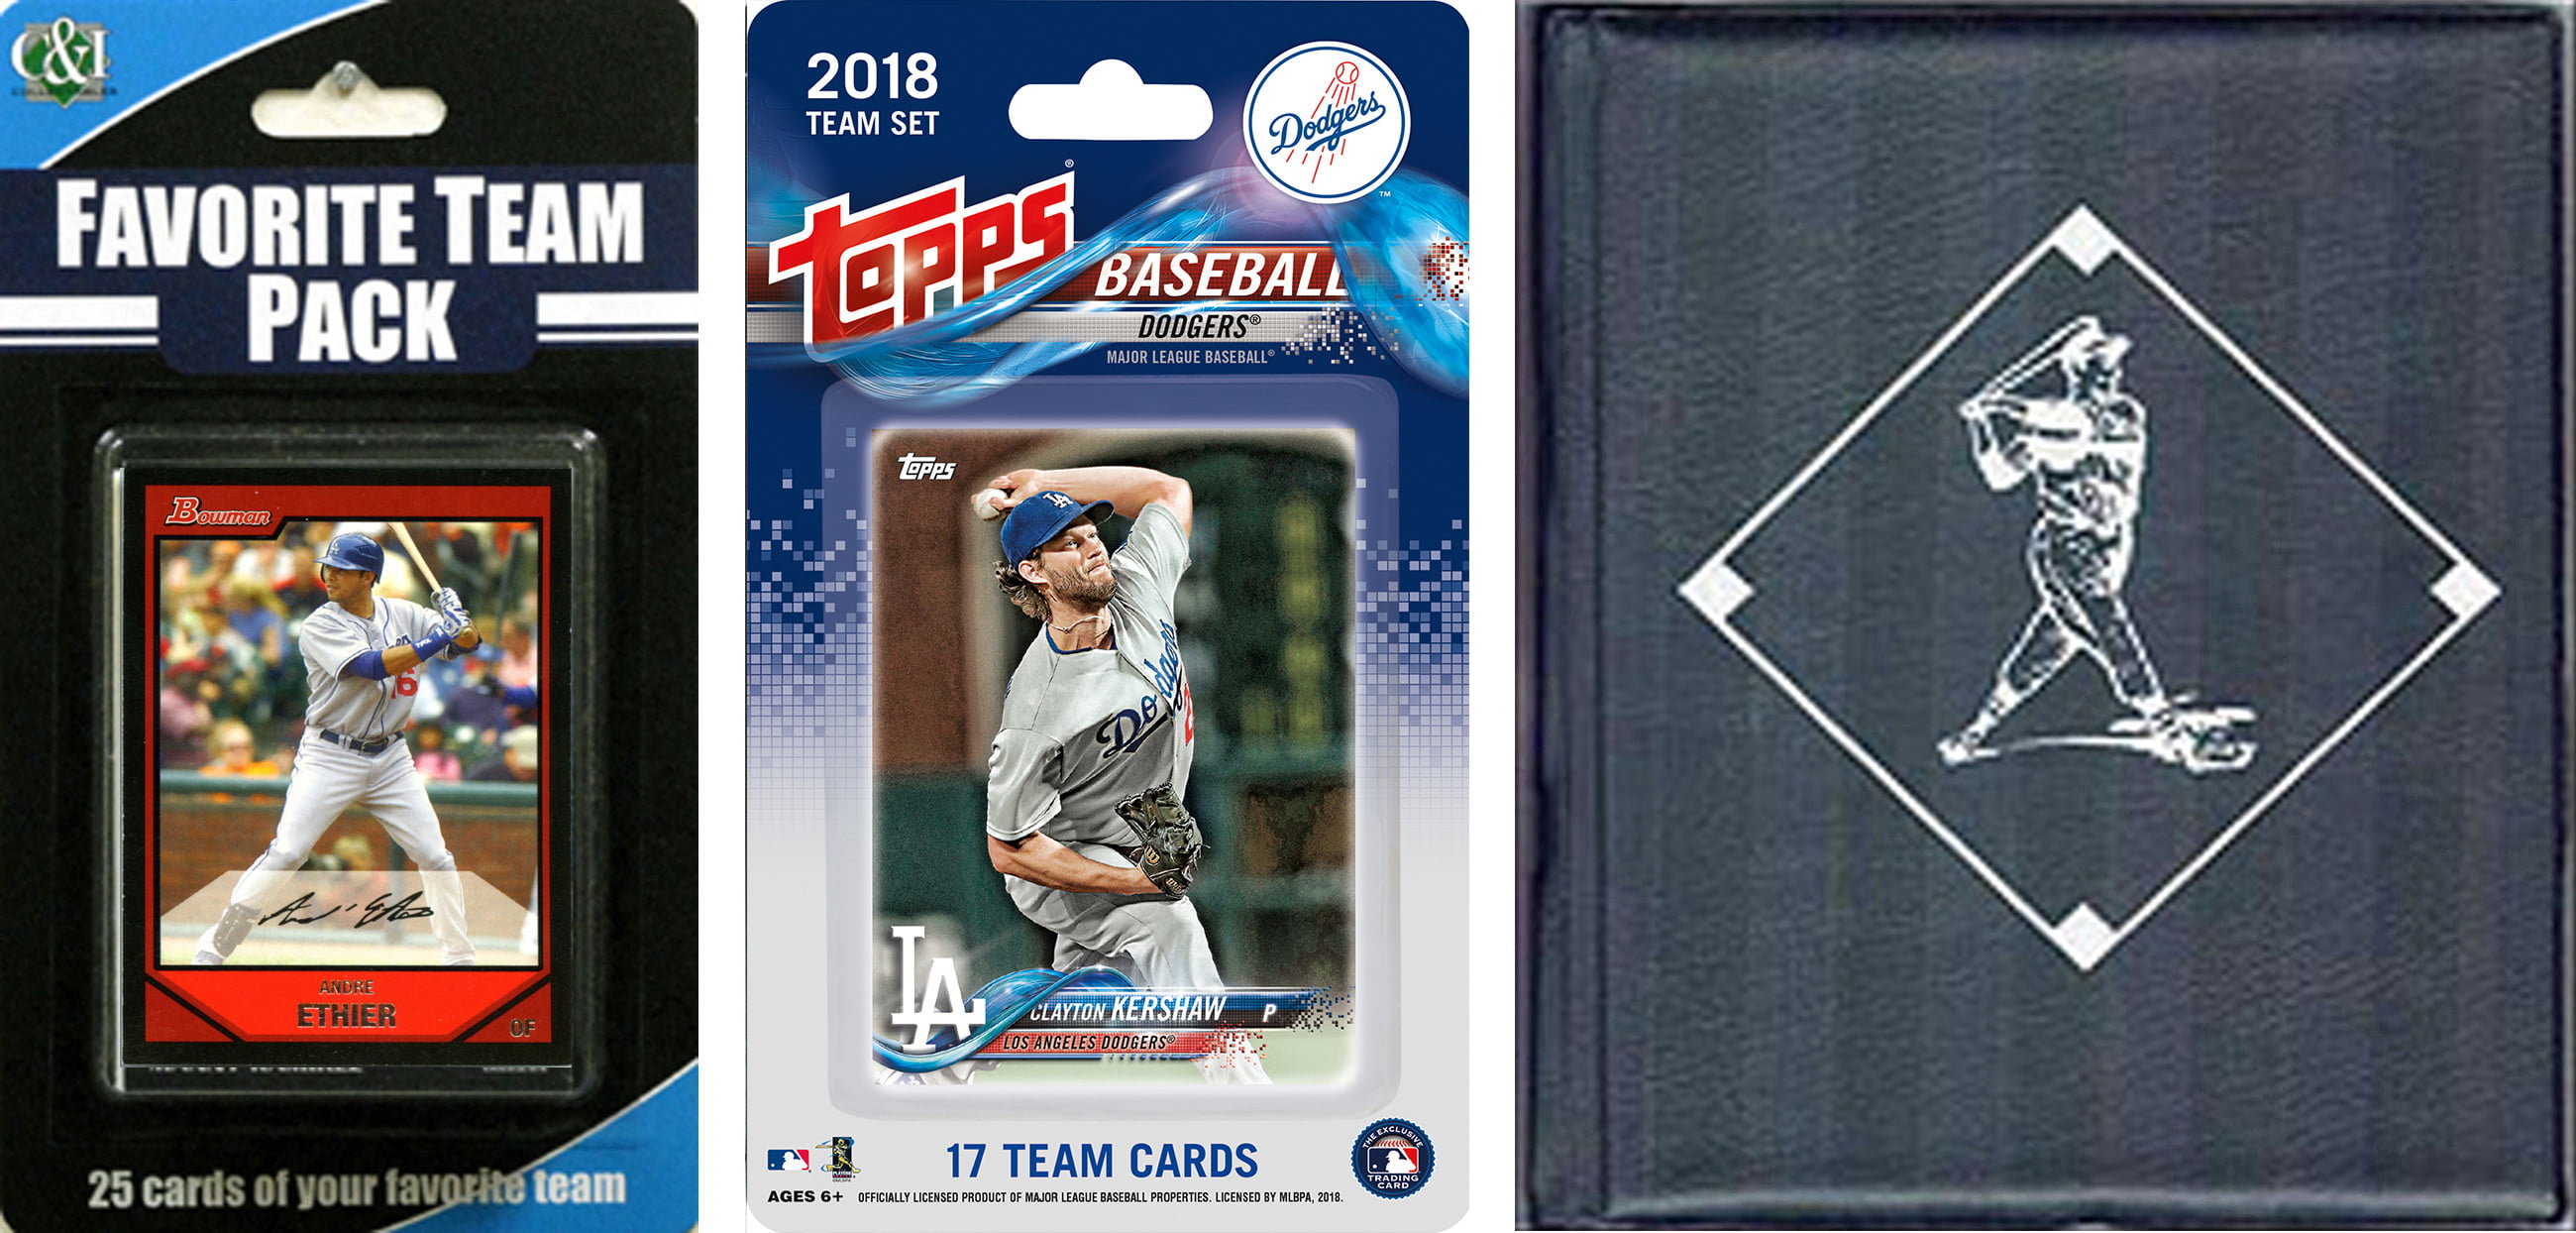 C & I Collectables DODGERSTSC18 MLB Los Angeles Dodgers Licensed 2018 Topps Team Set & Favorite Player Trading Cards Plus Storage Album -  C & I Collectables Inc